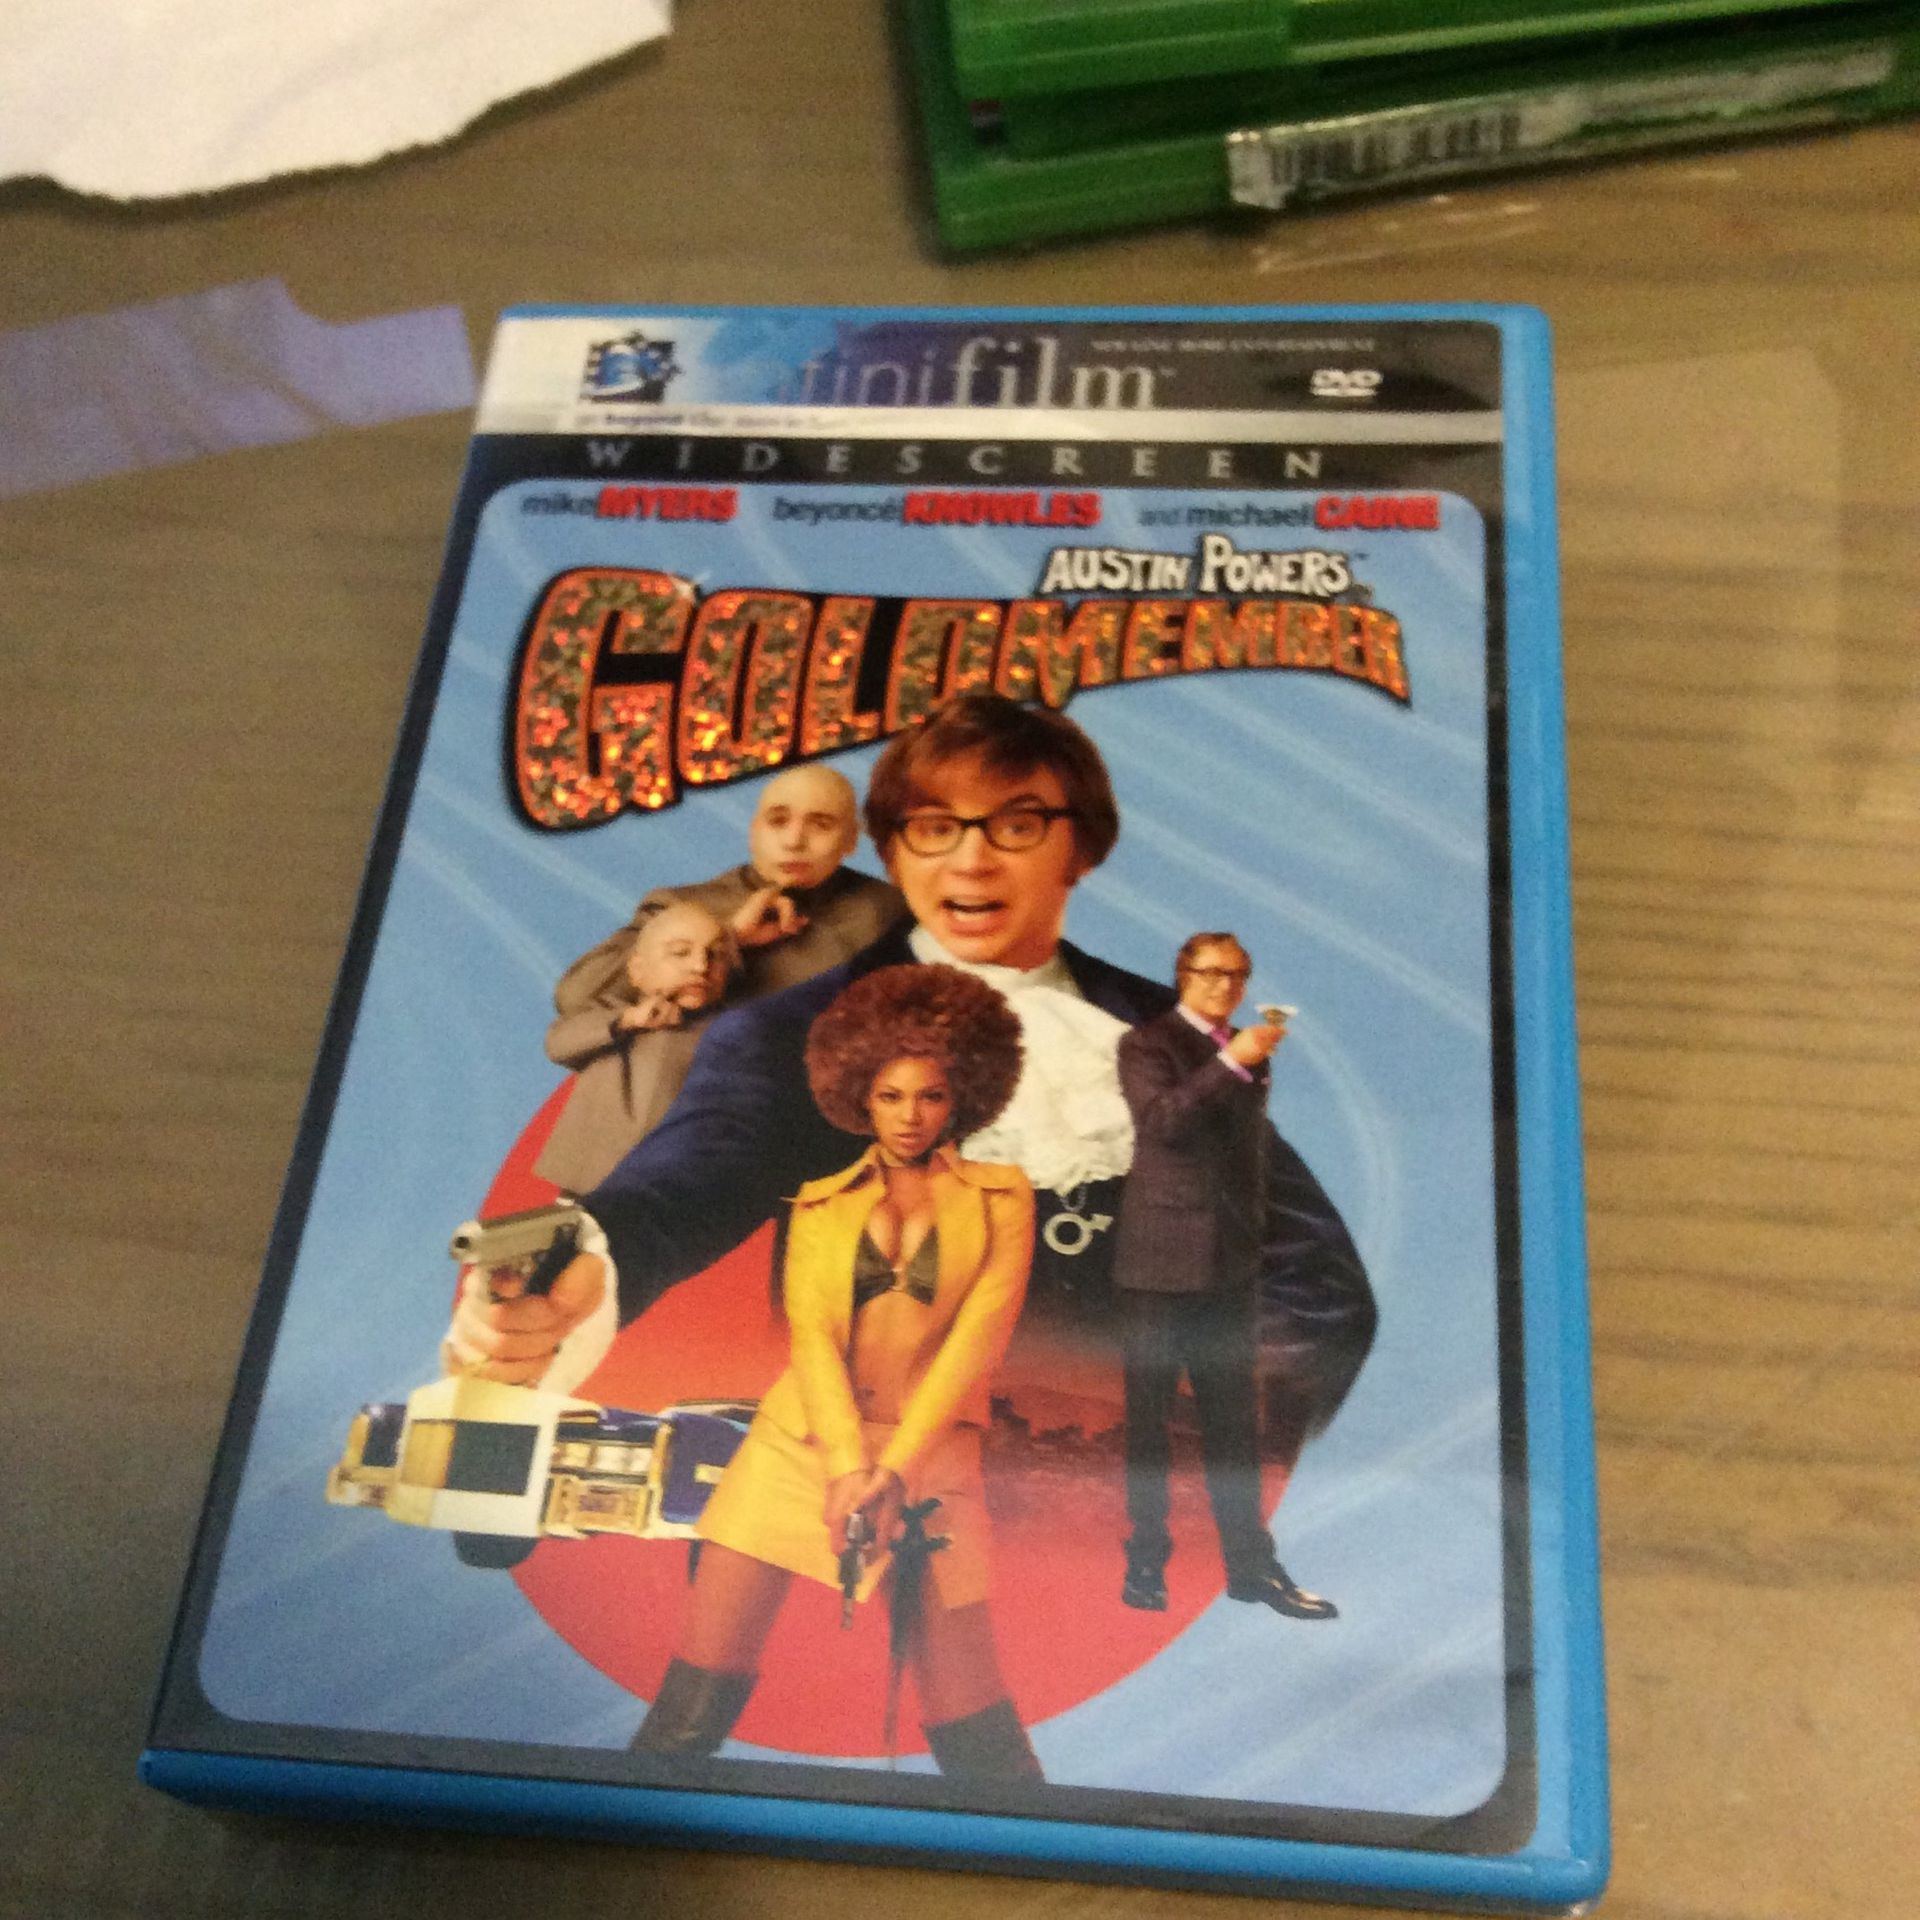 DVD Goldmember